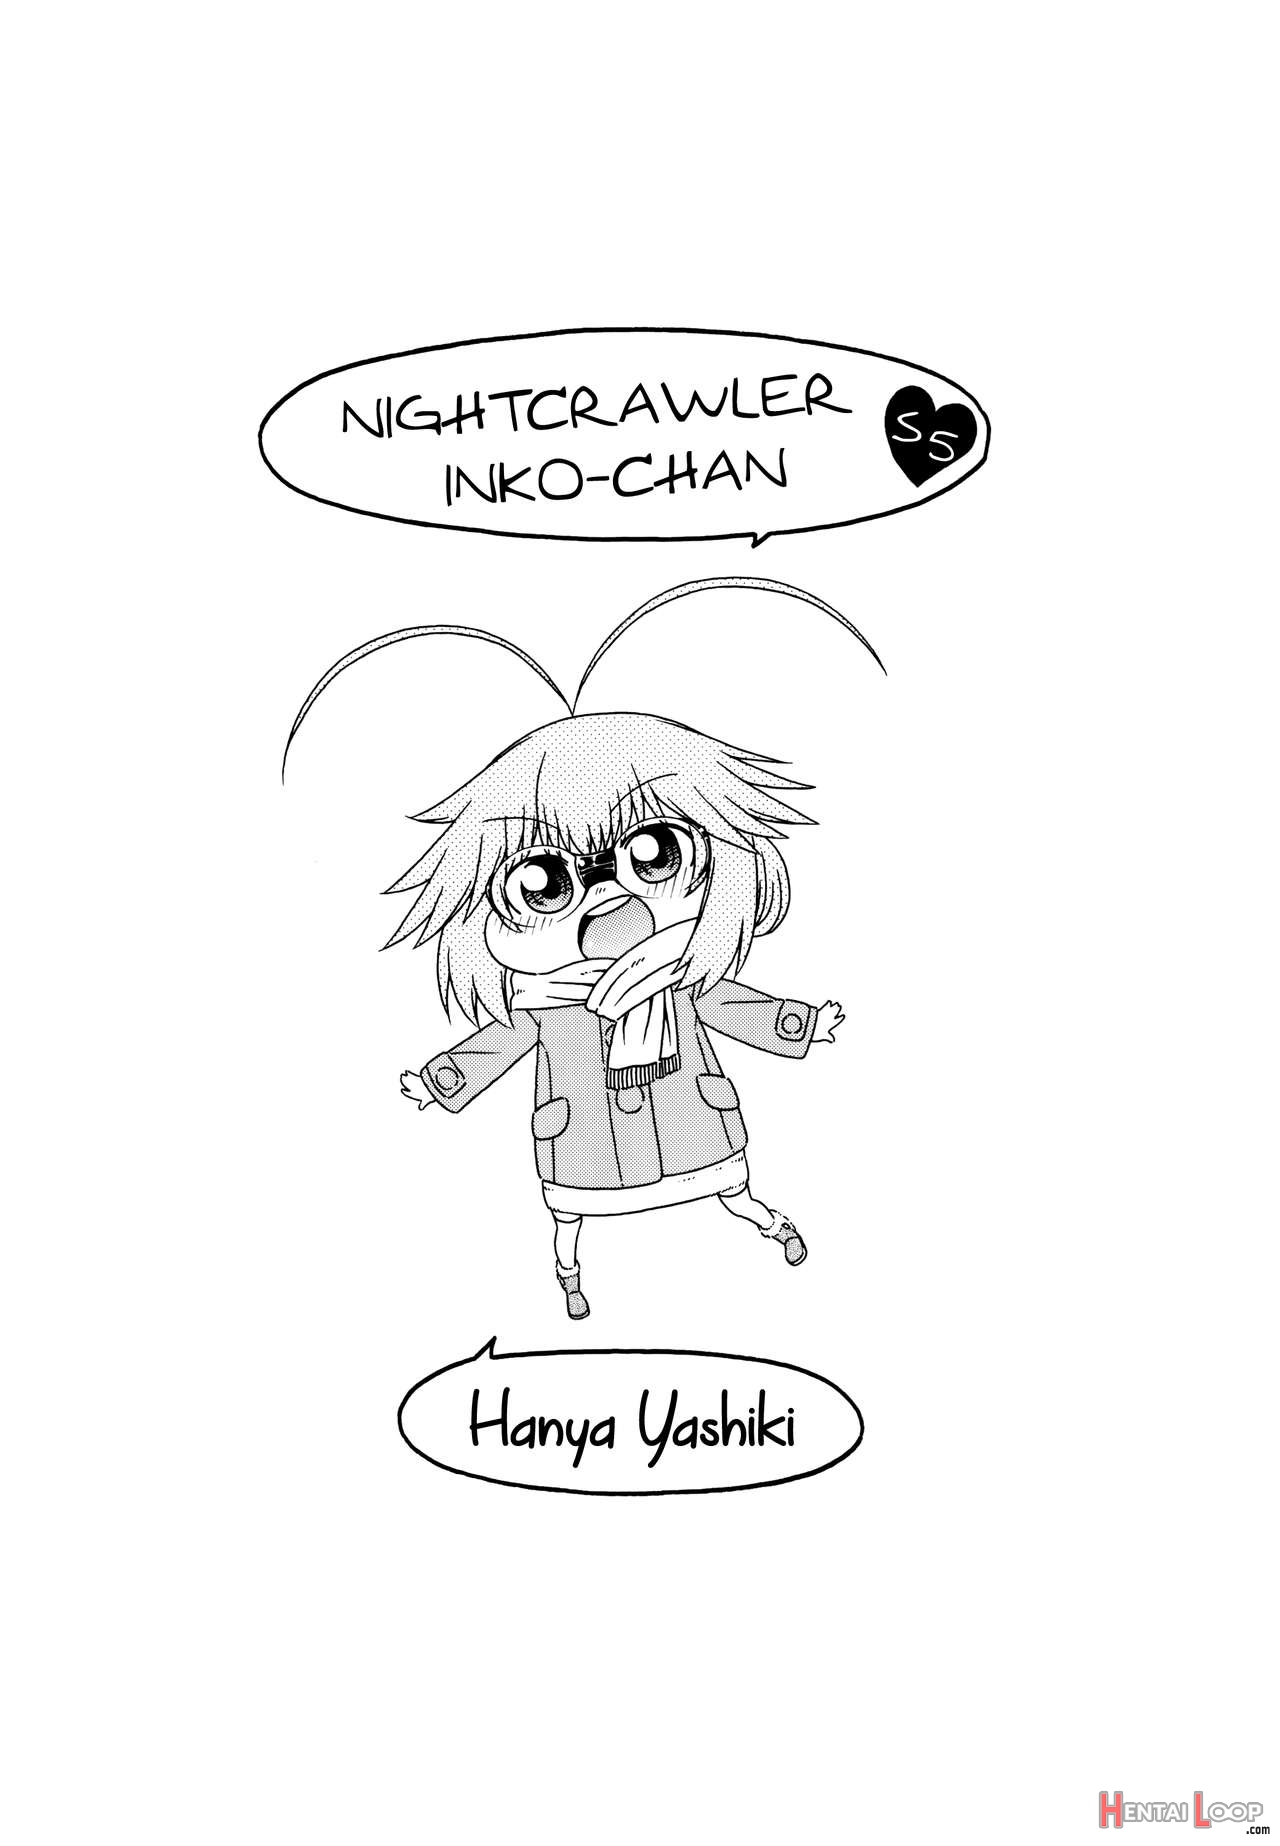 Nightcrawler Inko-chan S5 page 20